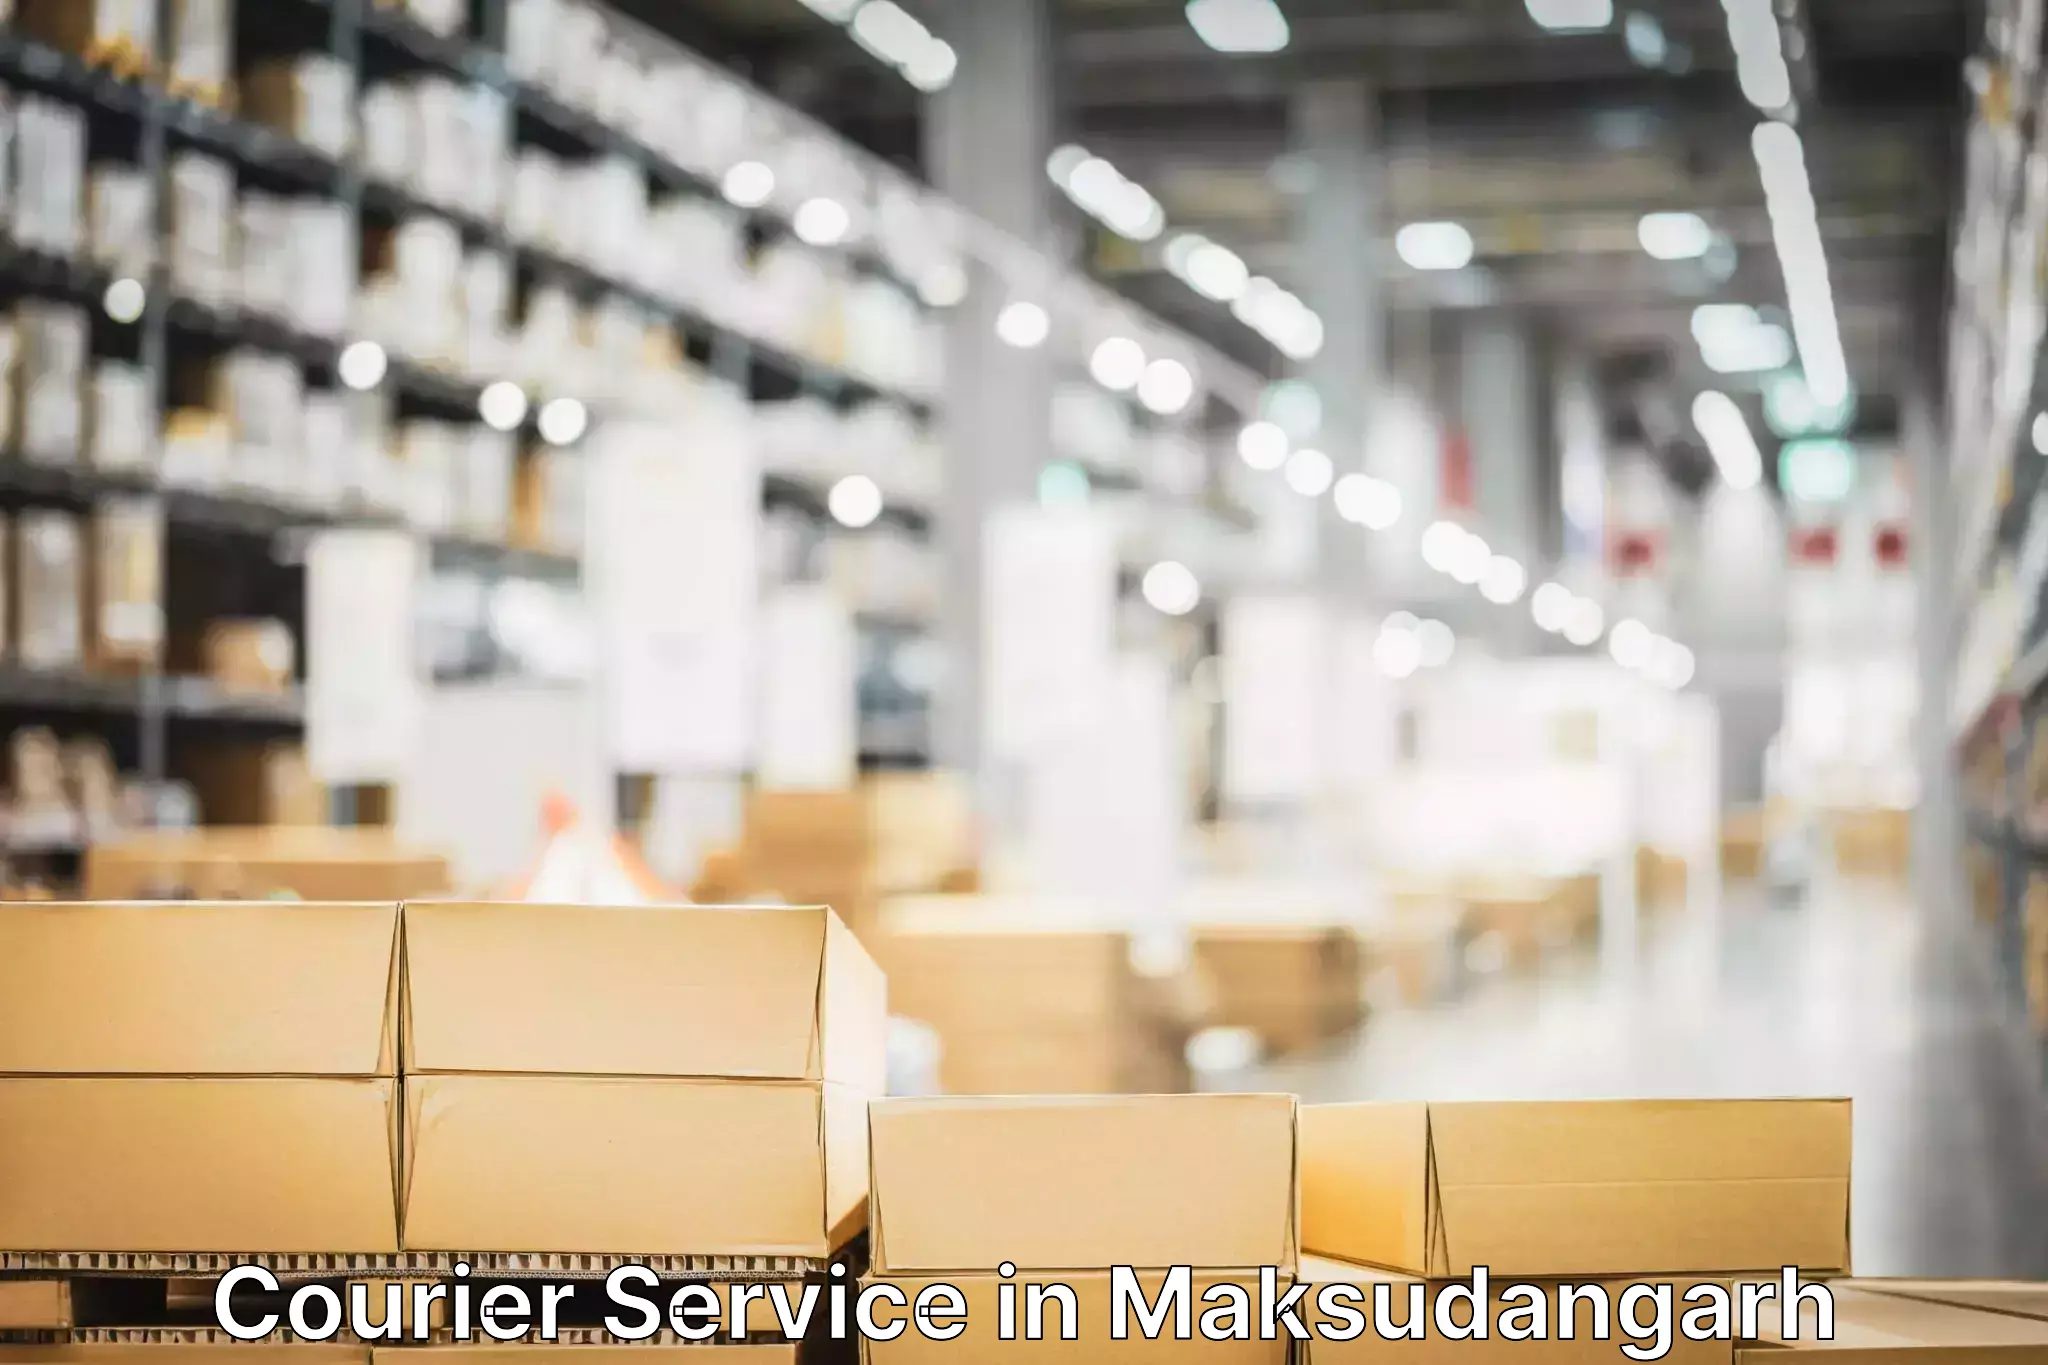 Shipping and handling in Maksudangarh